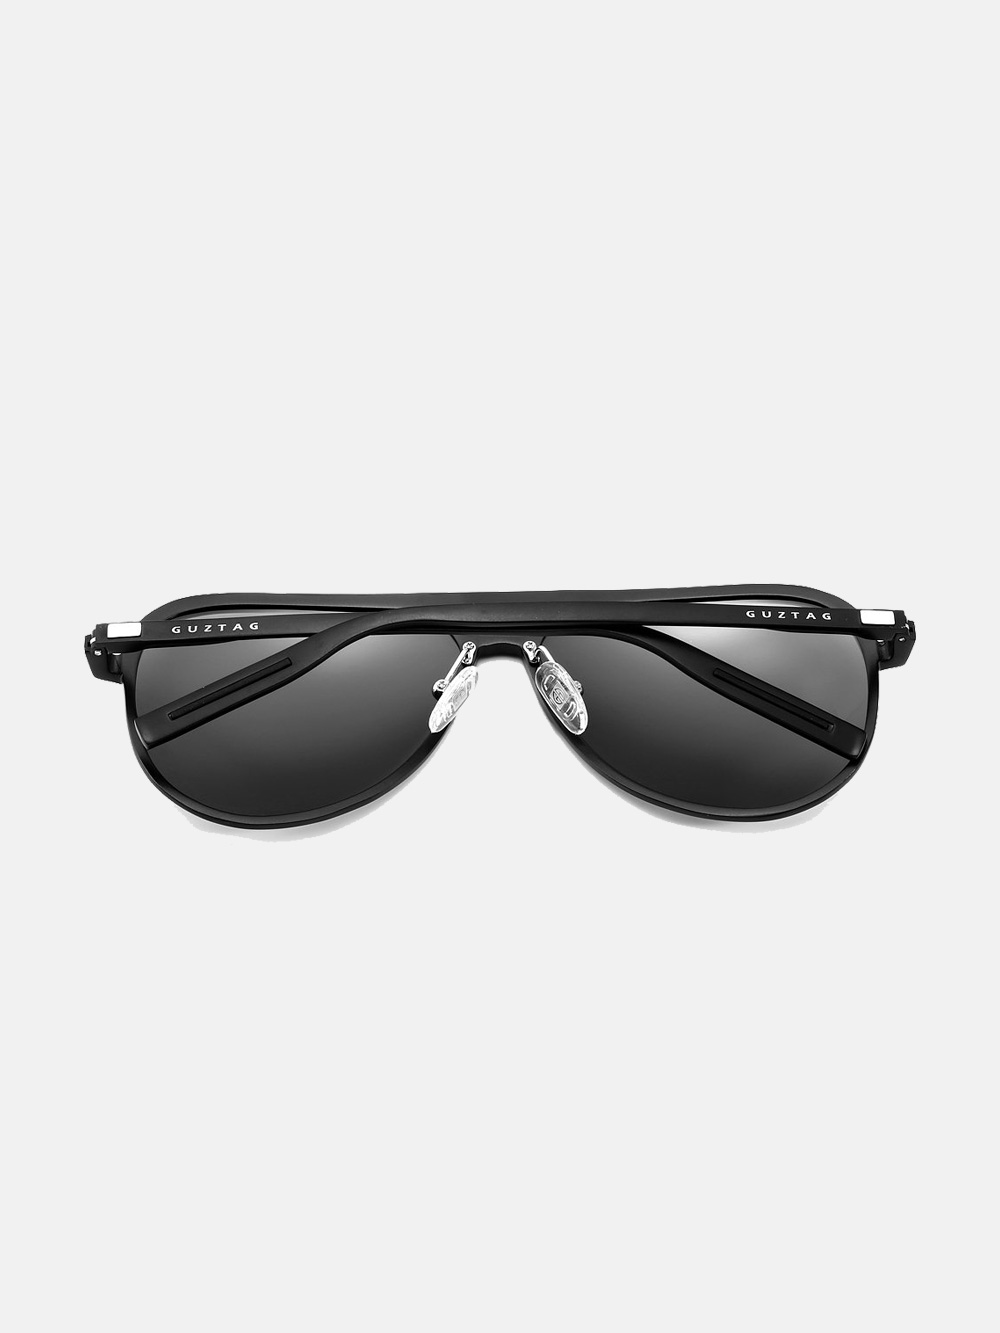 EnChroma Atlas Sunglasses - Color Blind Glasses